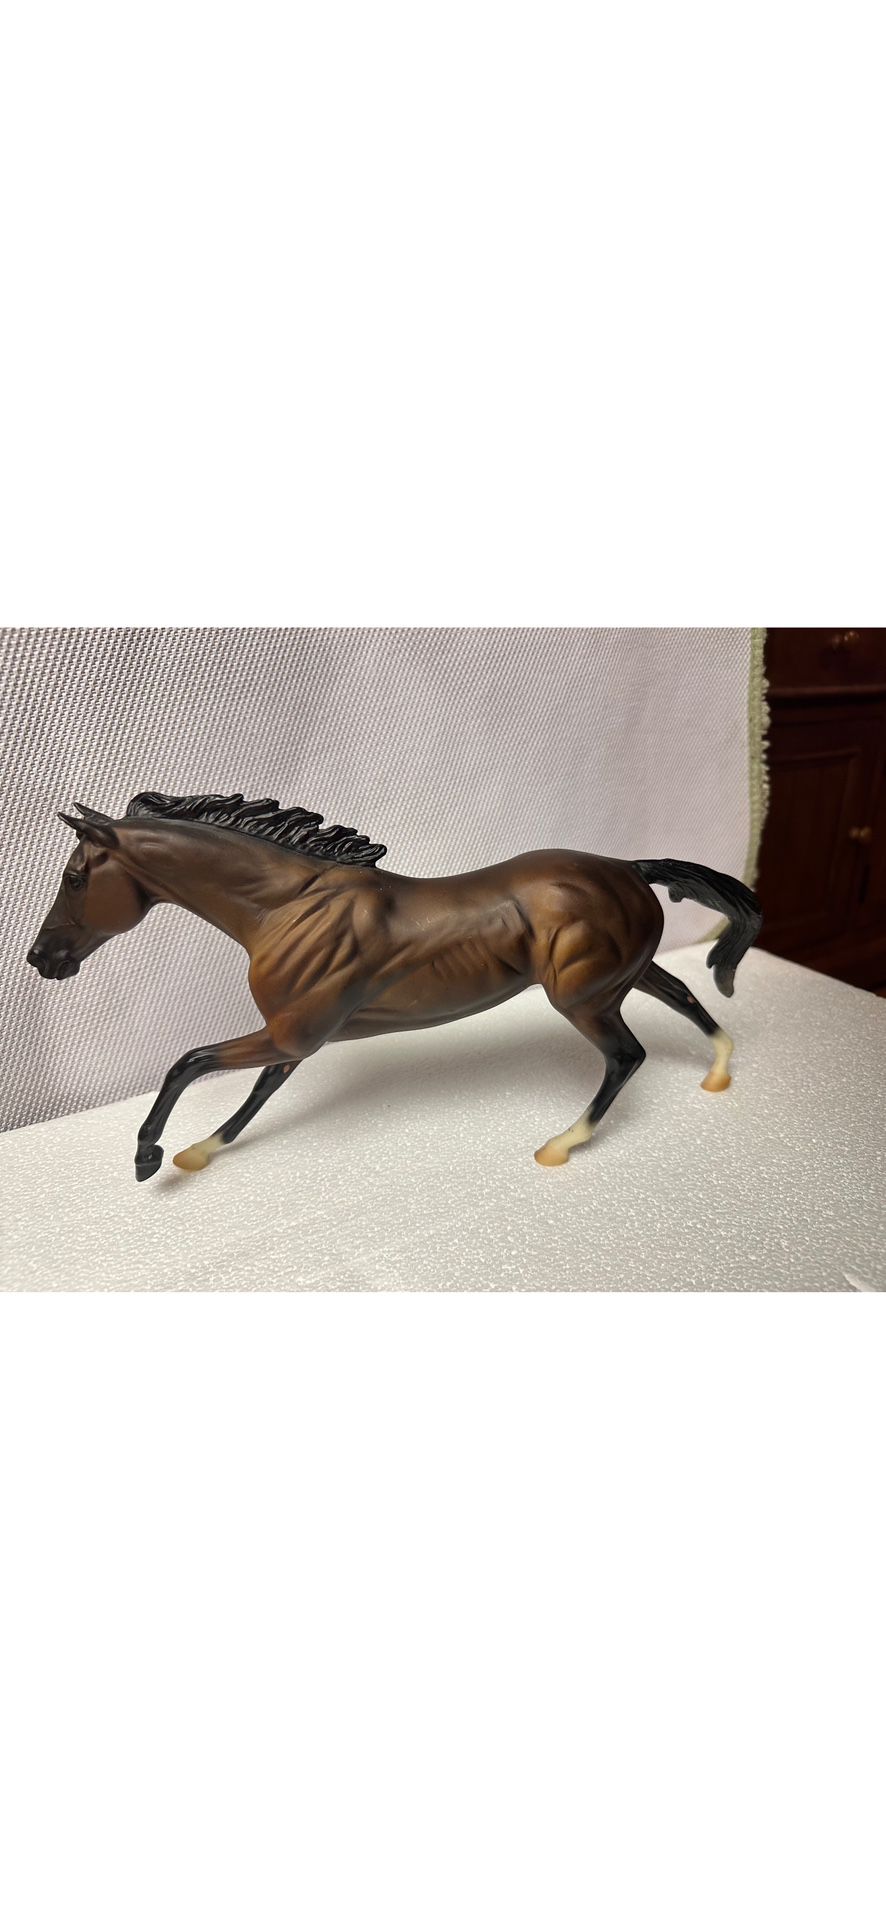 Breyer Collectable Model Horses 1998 Bay Race Horse Champion Cigar